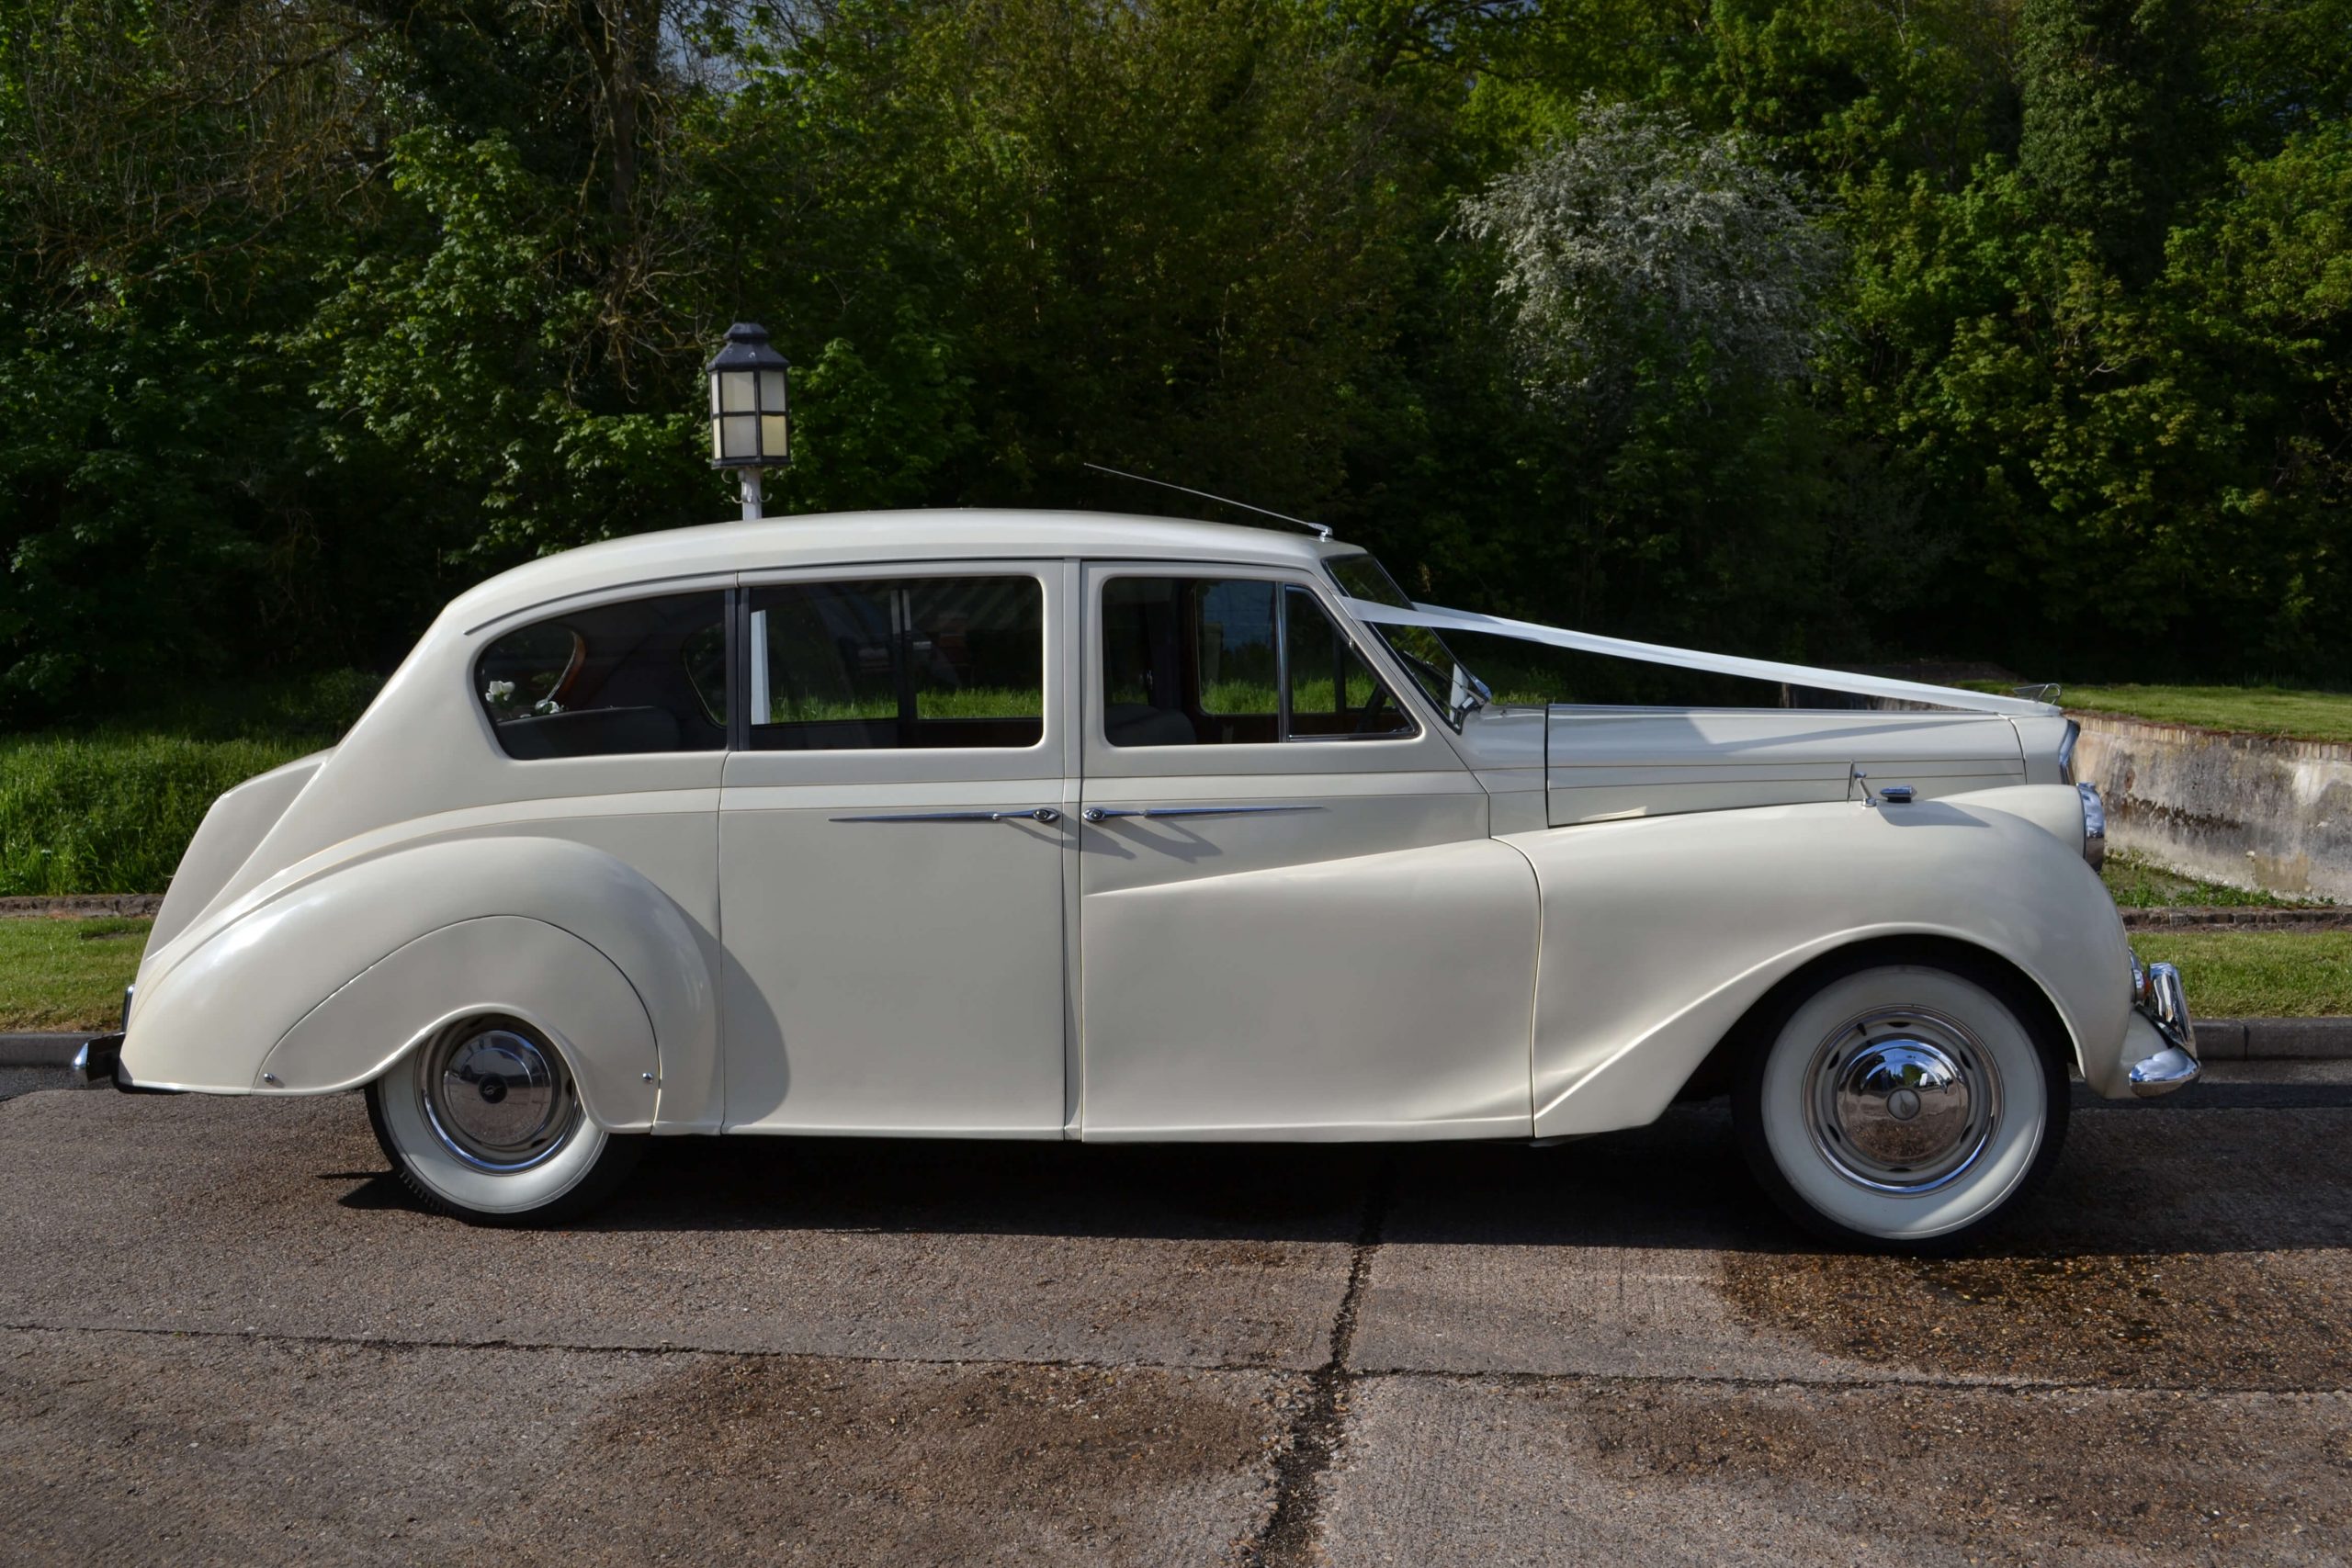 1960 Austin Princess Limousine – White